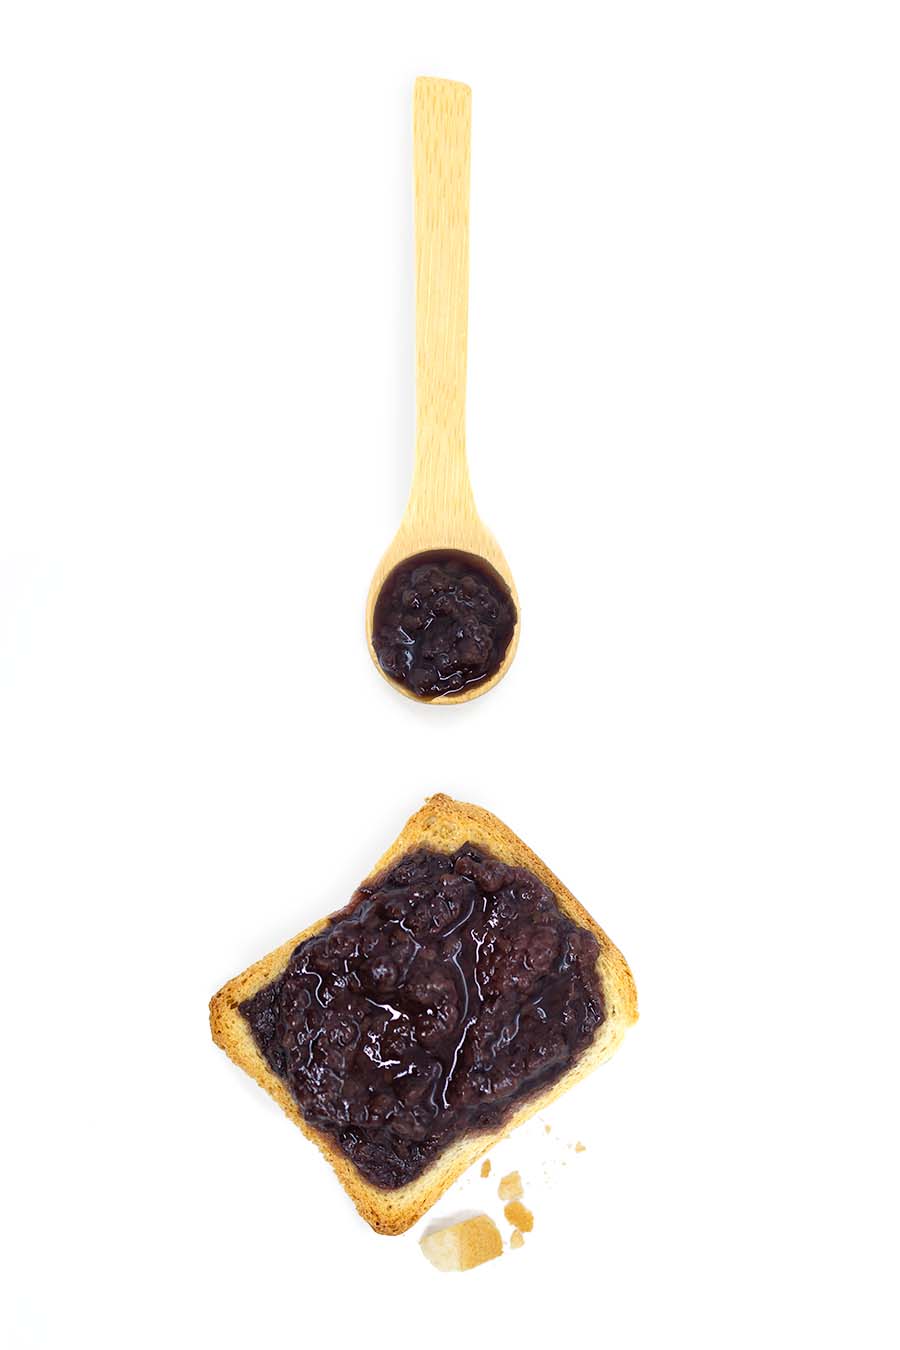 Artisanal No Sugar Added Wild Raspberry Jam spoon toast Health from Europe